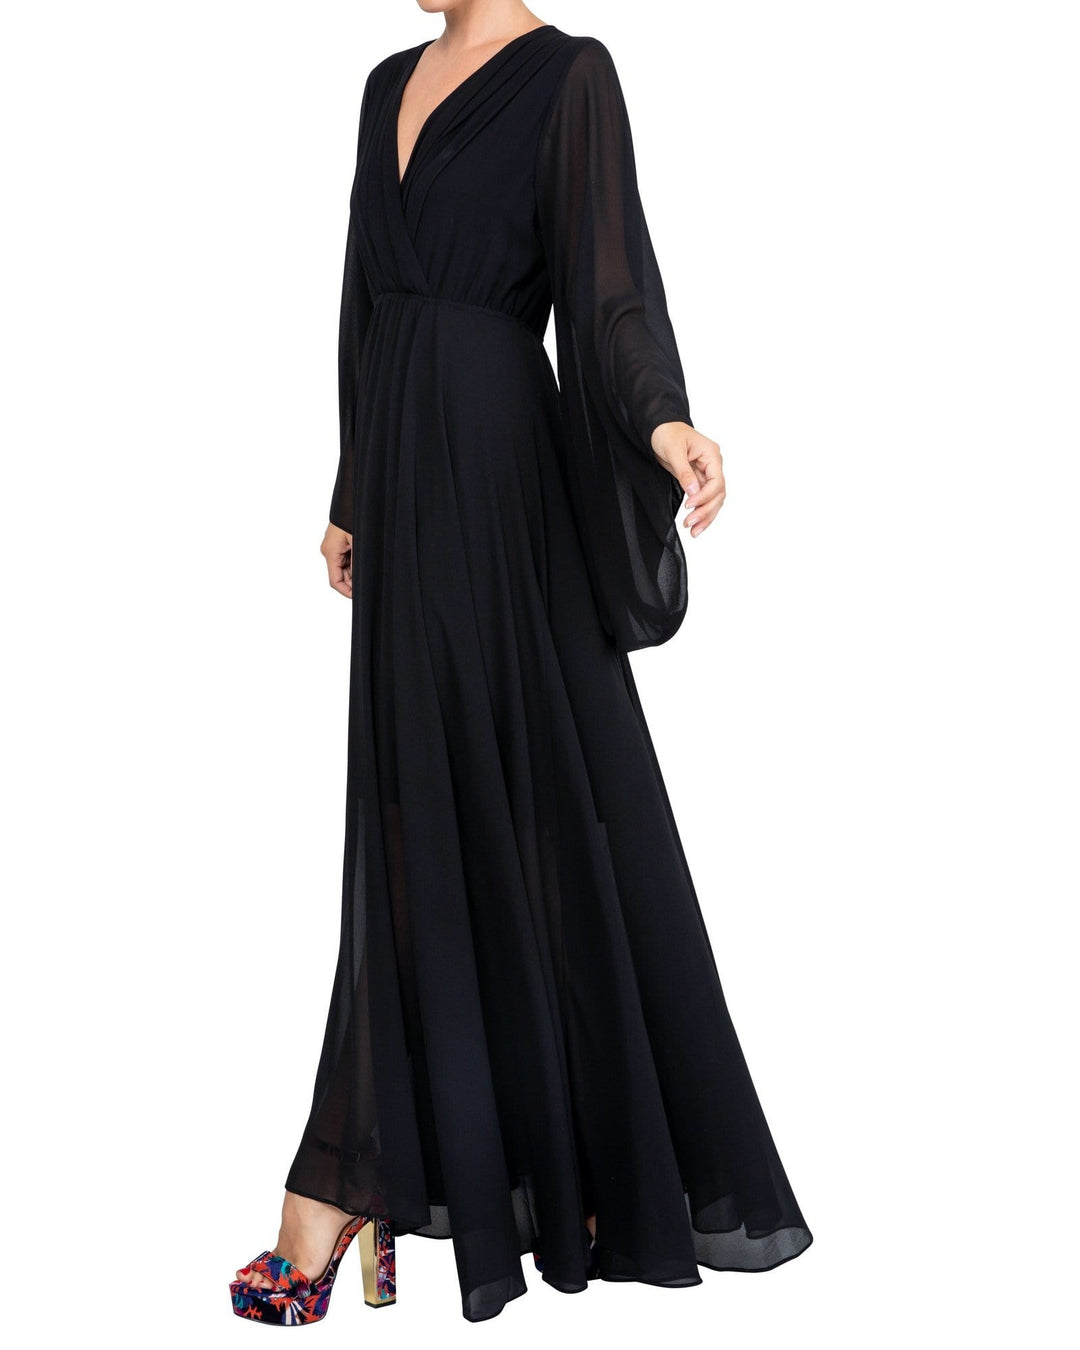 Sunset Maxi Dress - Black by Meghan Fabulous